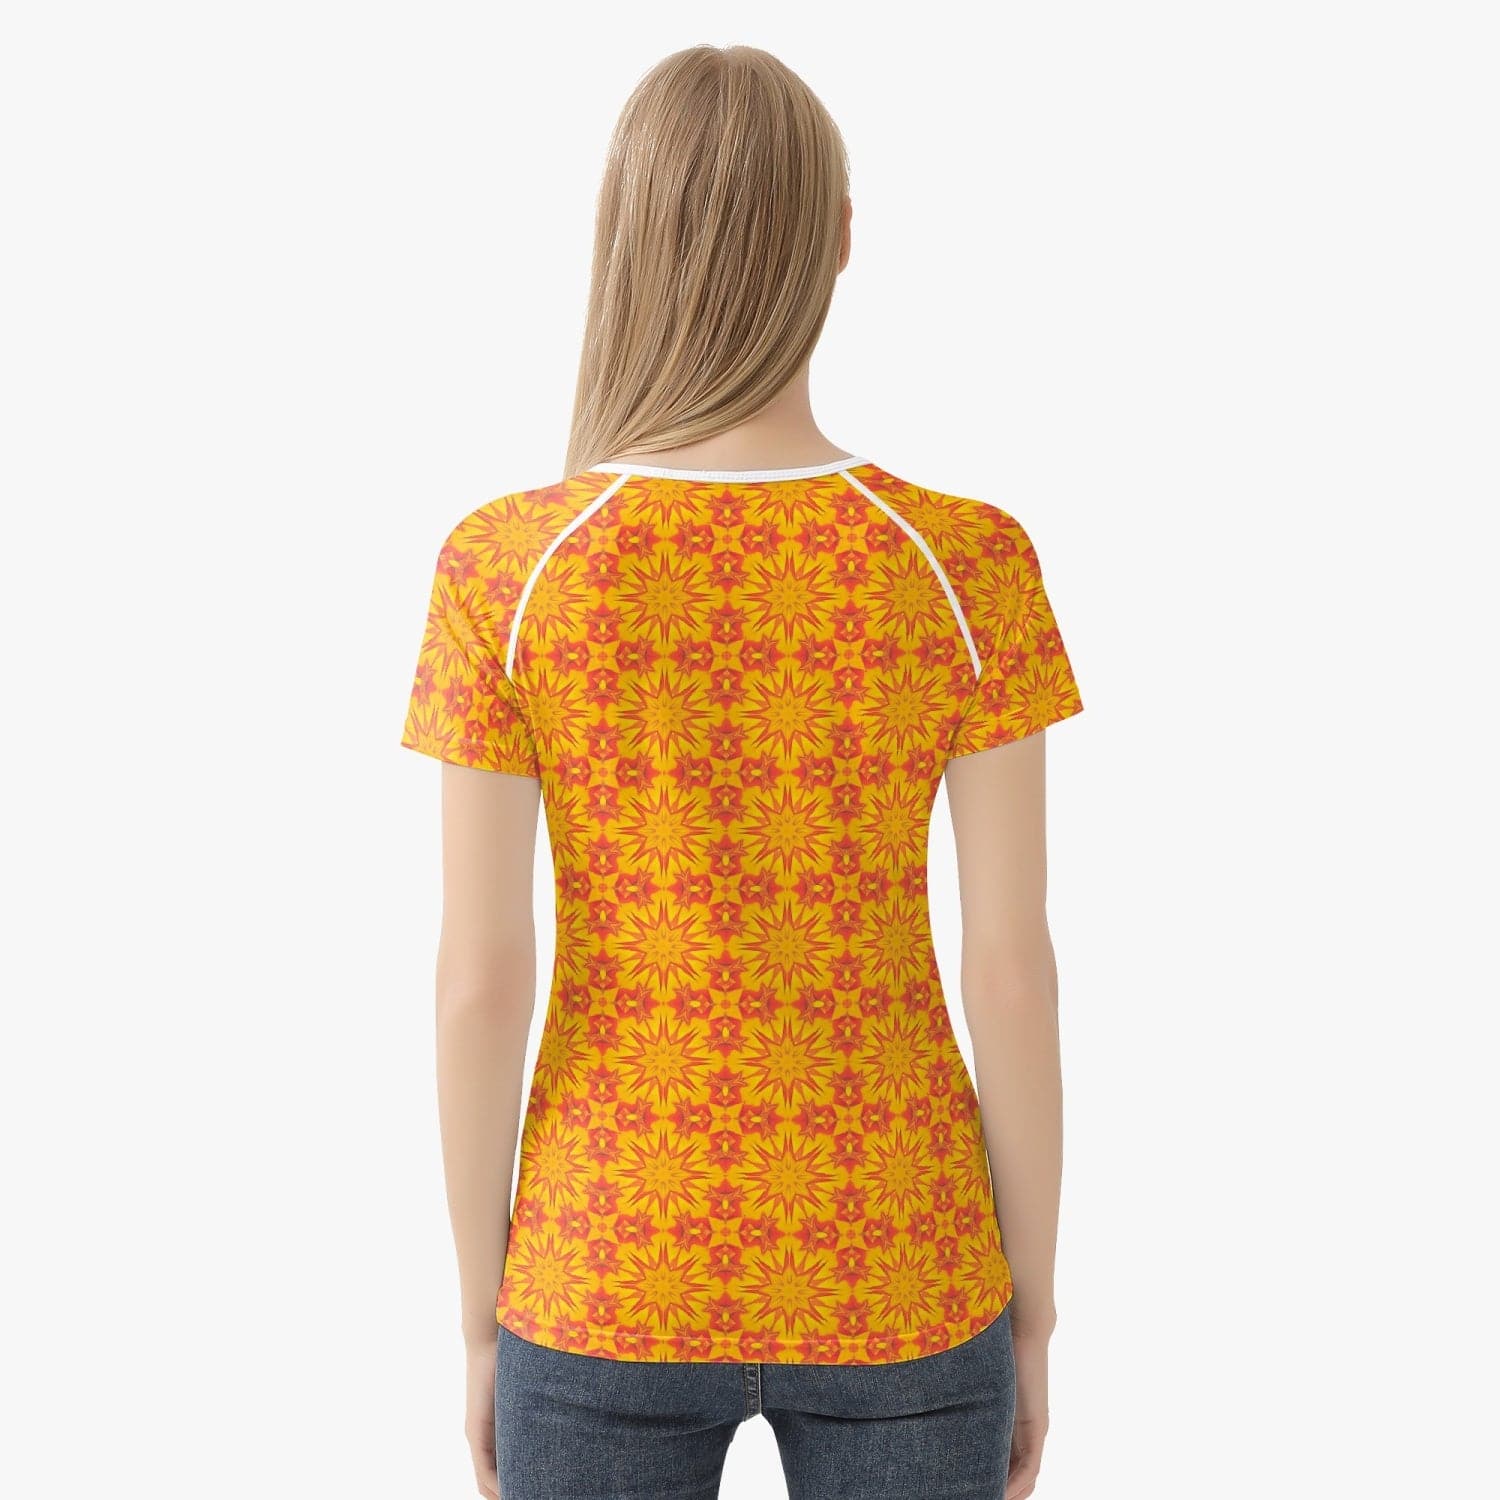 Solar Plexus  Handmade Yoga Top for  Women sports T-shirt, nby Sensus Studio Design